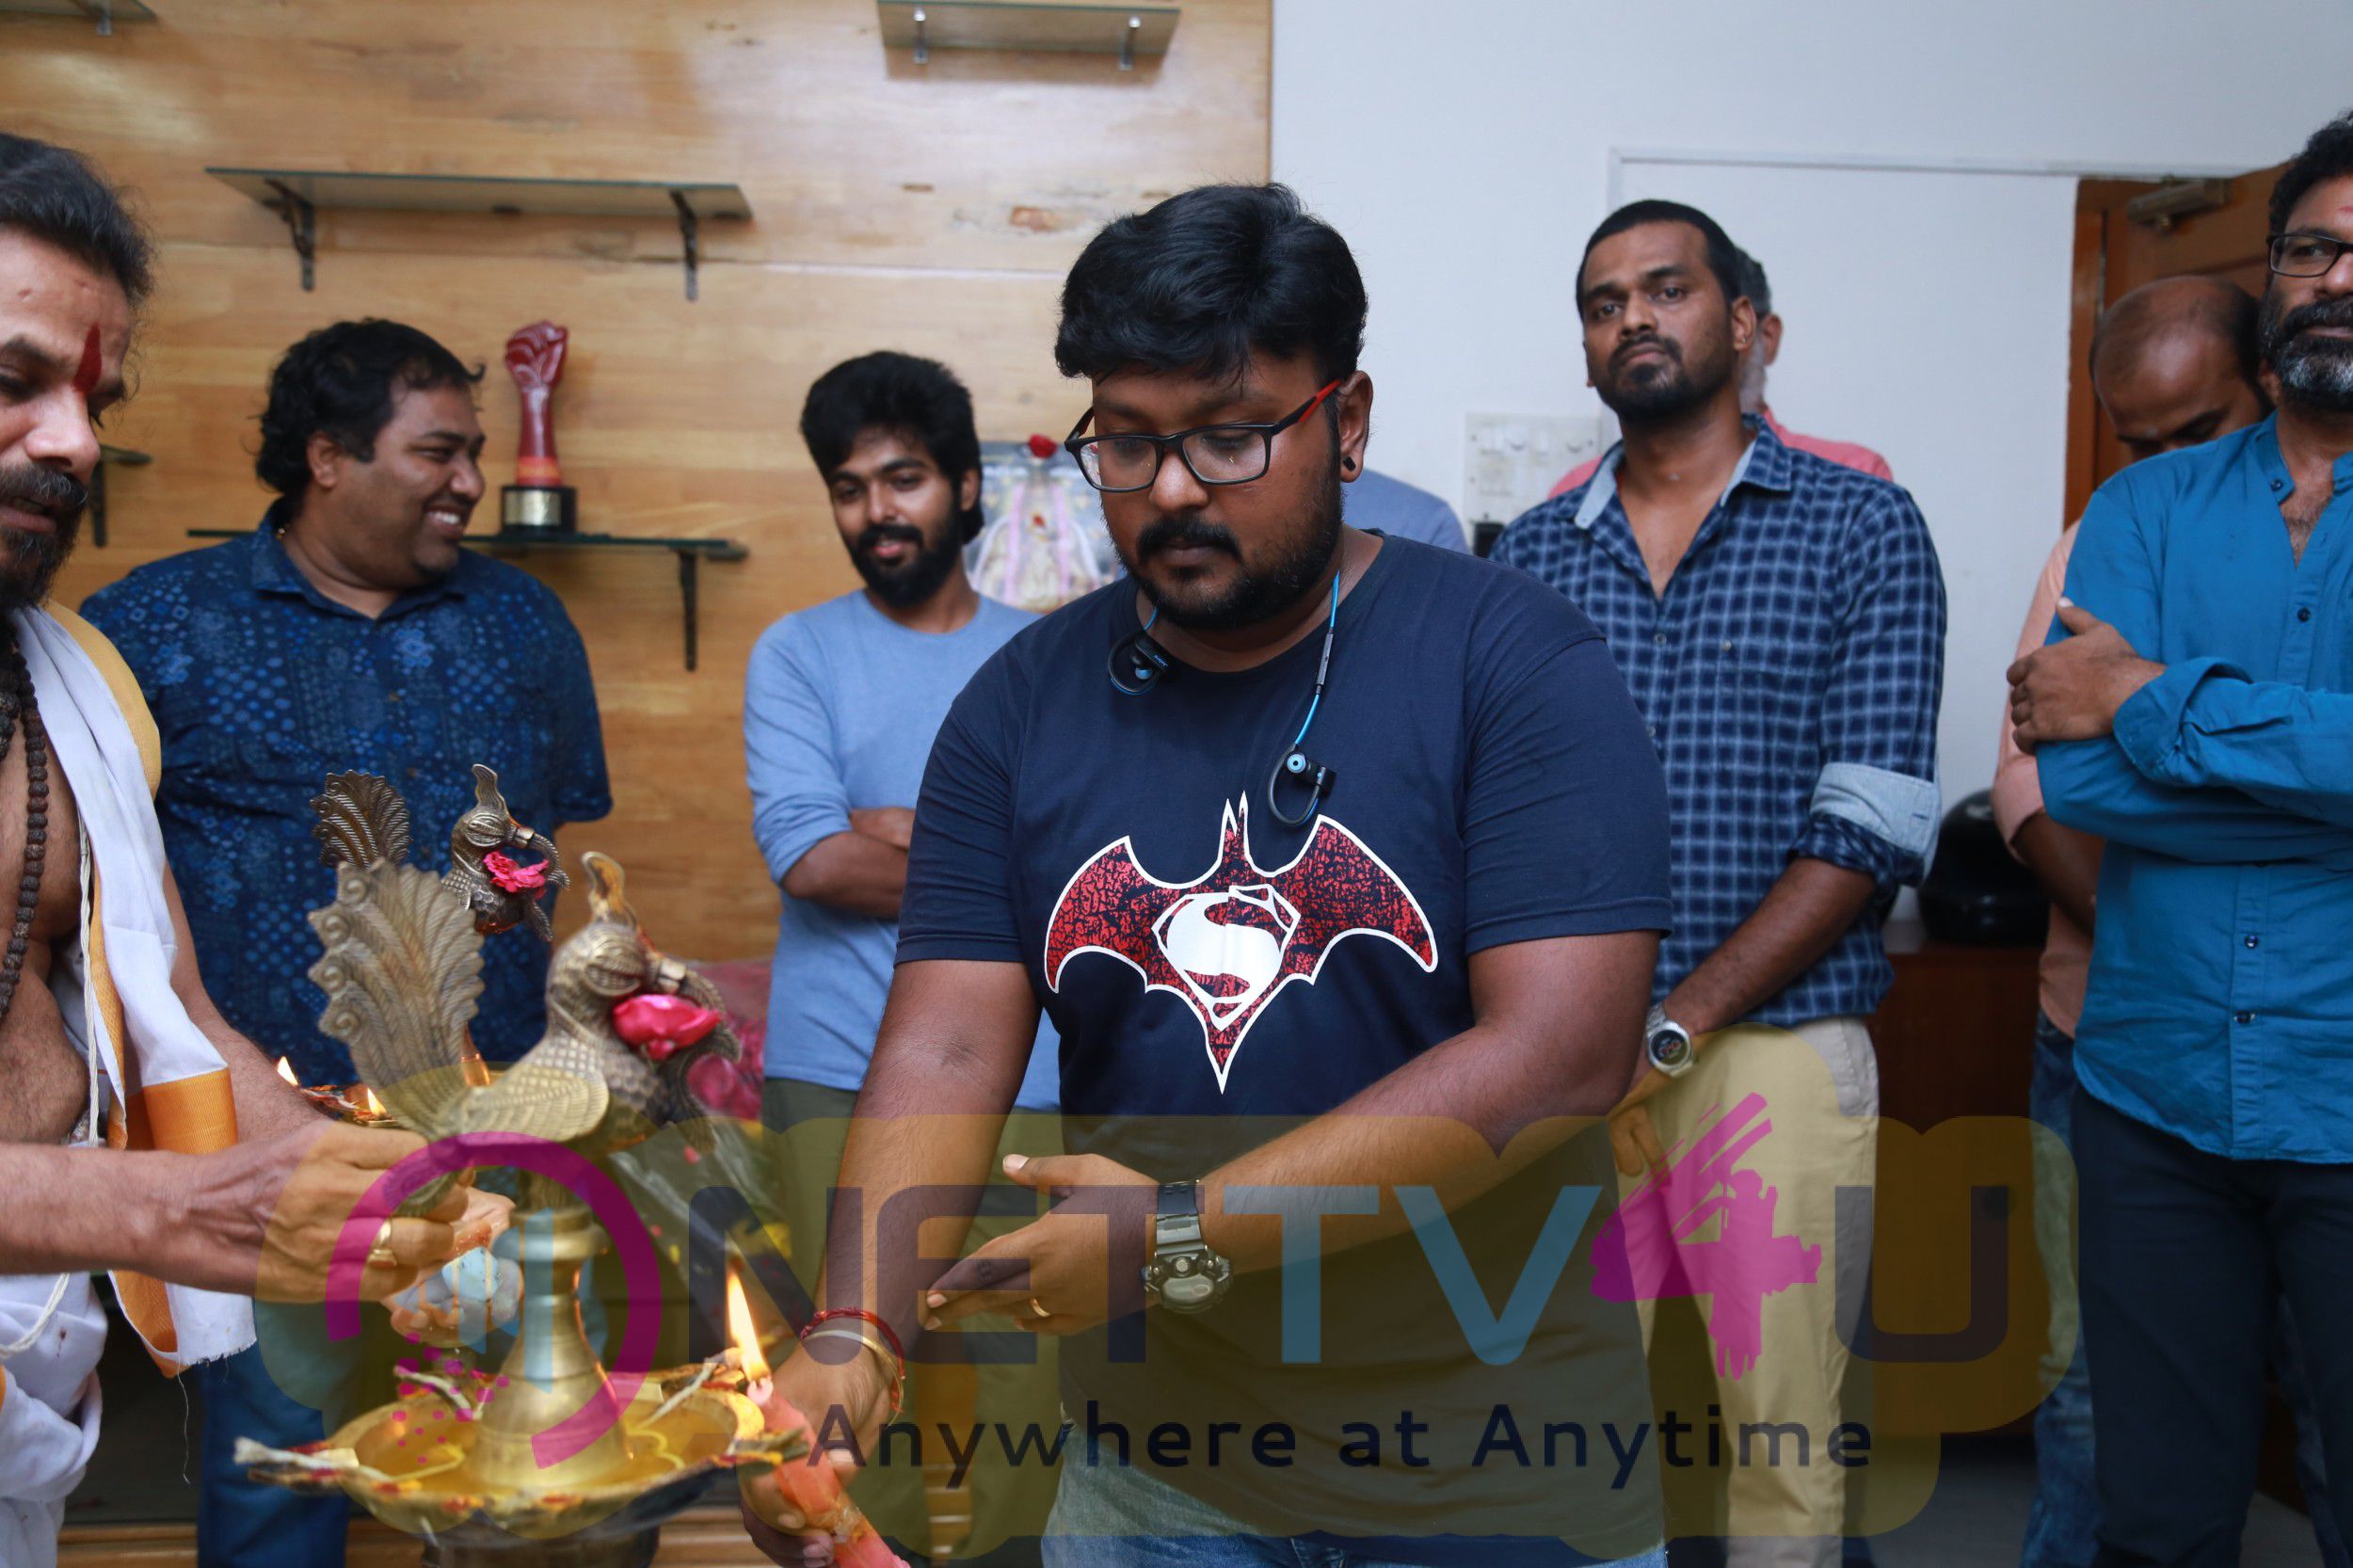 4G Tamil Movie Pooja Attractive Pics Tamil Gallery